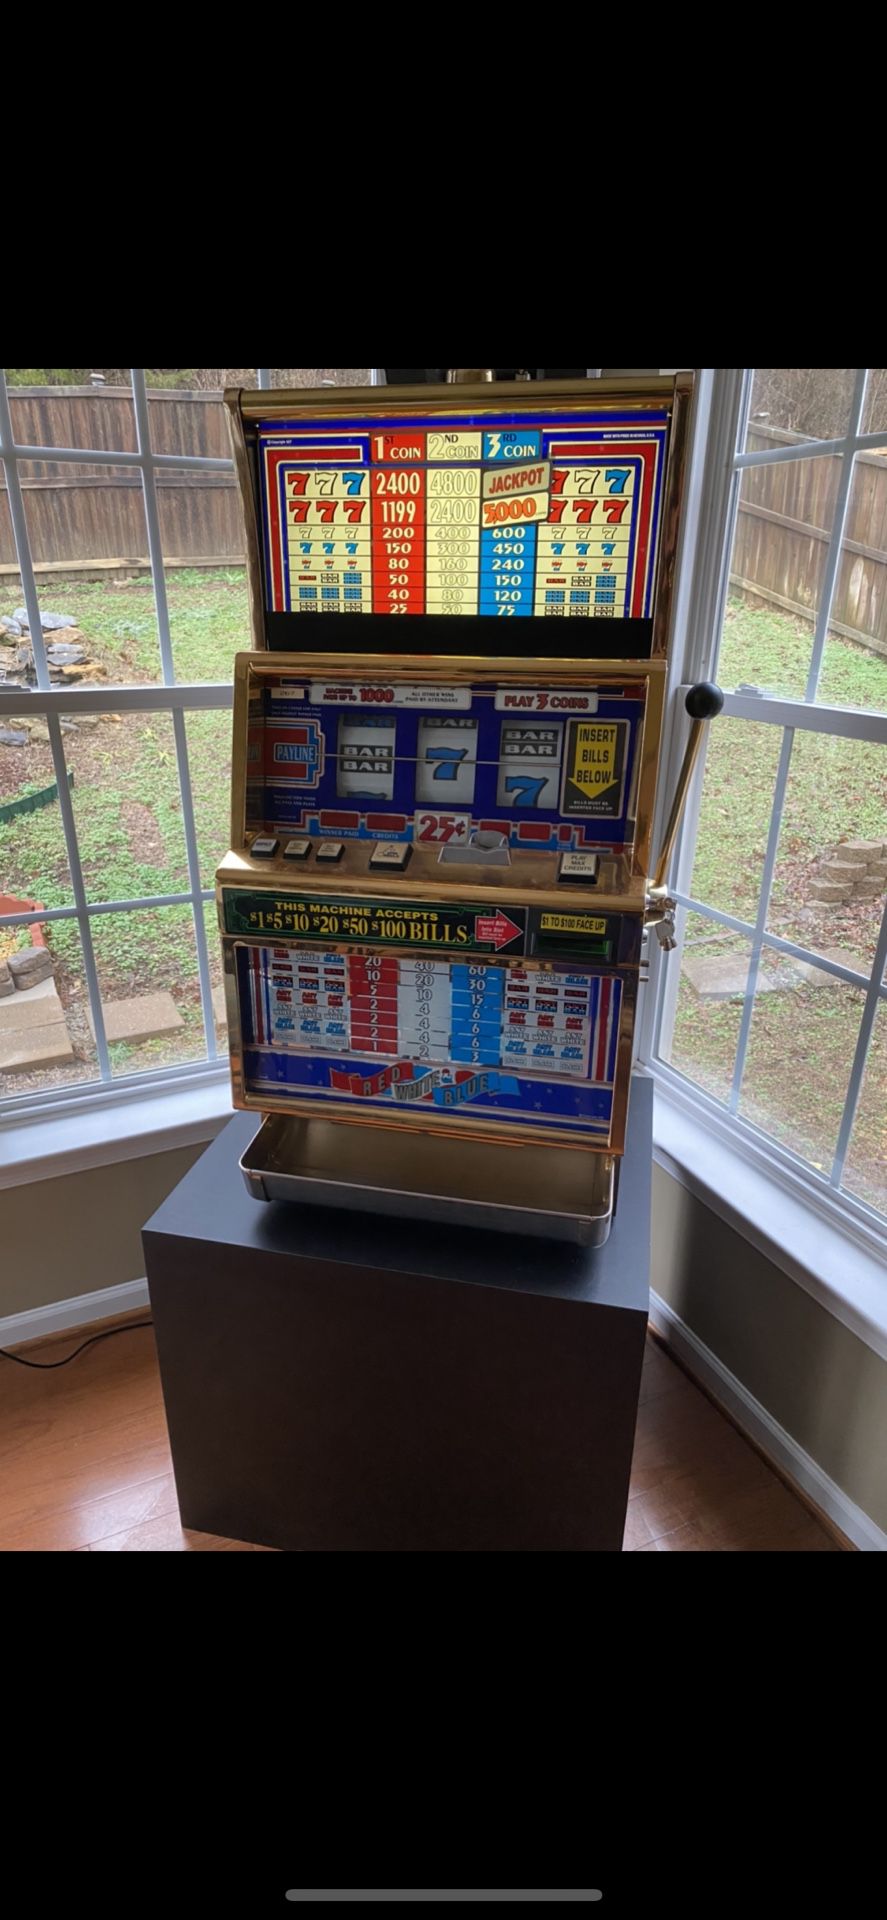 Real slot machine. Takes bills